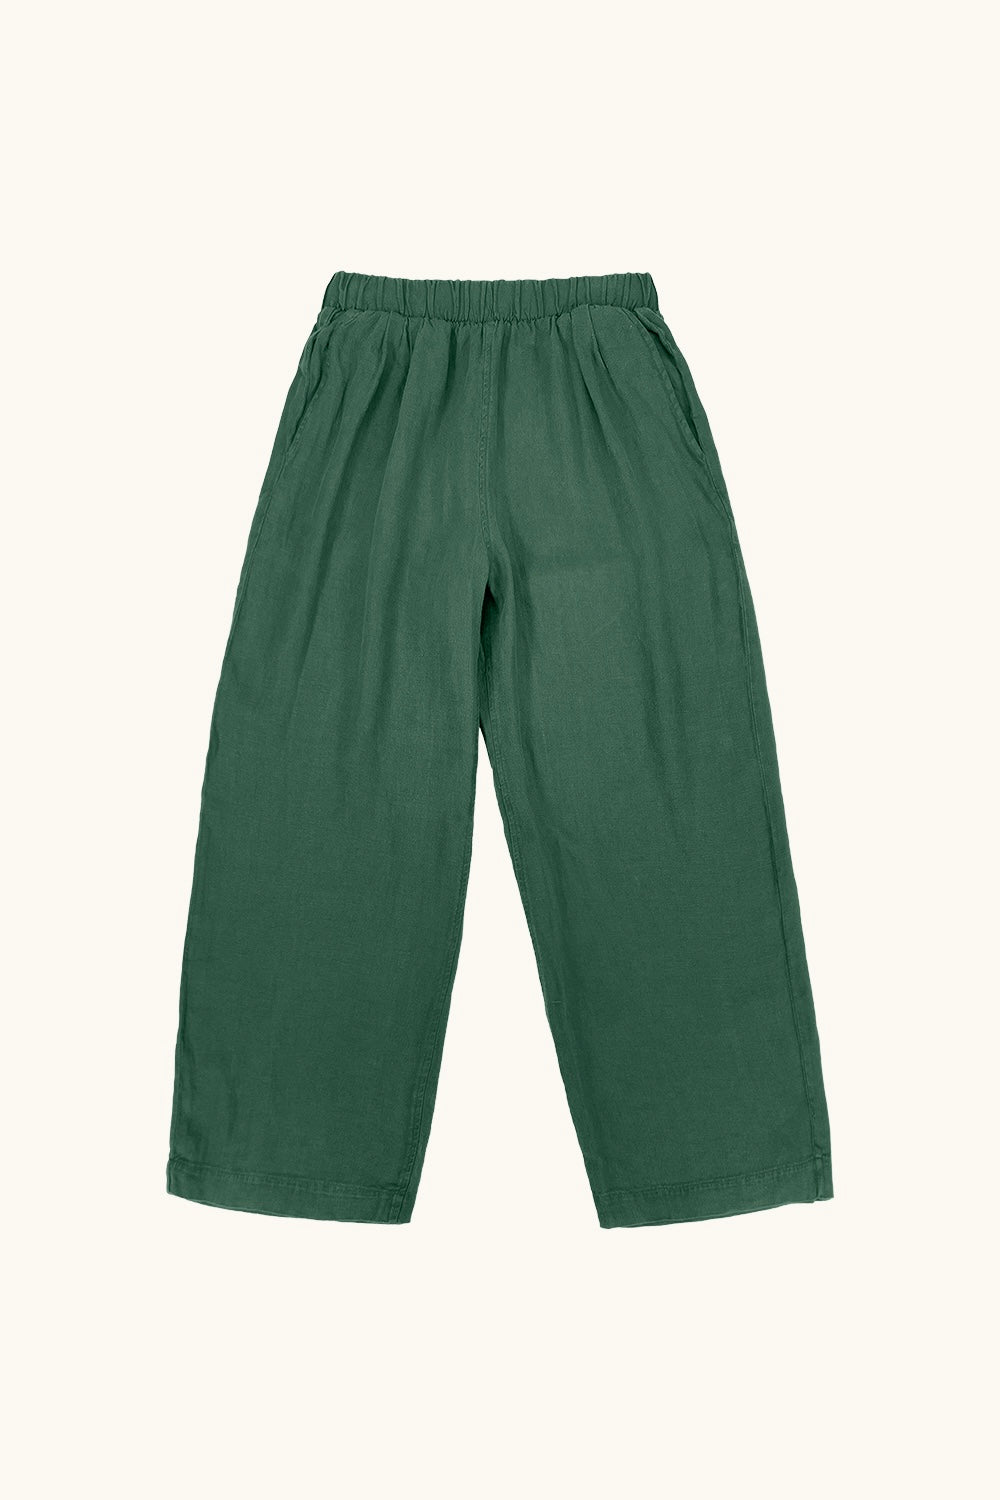 Cambria Pant | Jungmaven Hemp Clothing & Accessories / Color: Hunter Green